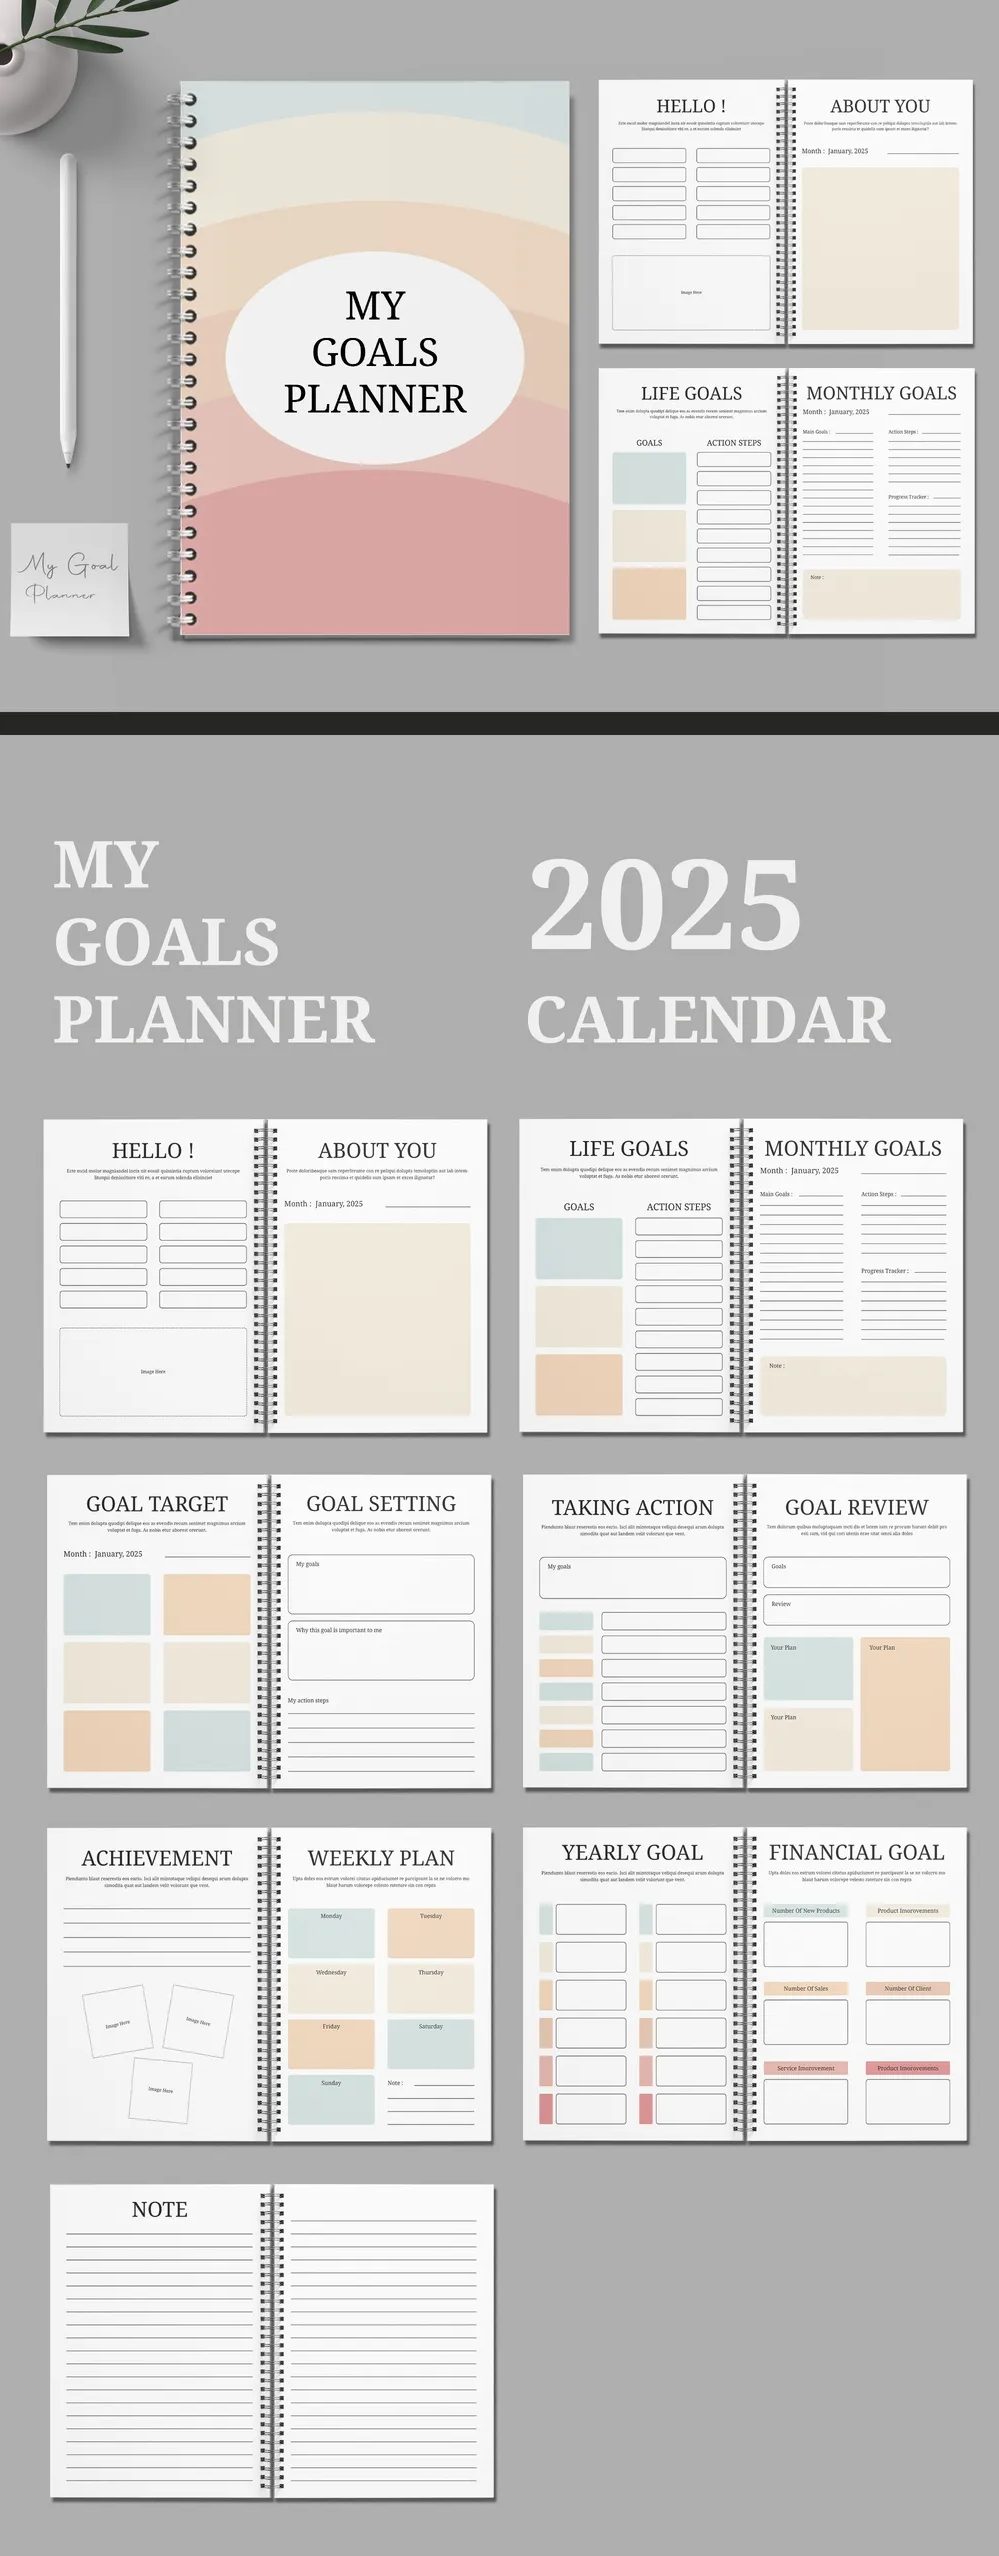 Adobestock - Goal Planner Templates 714968063